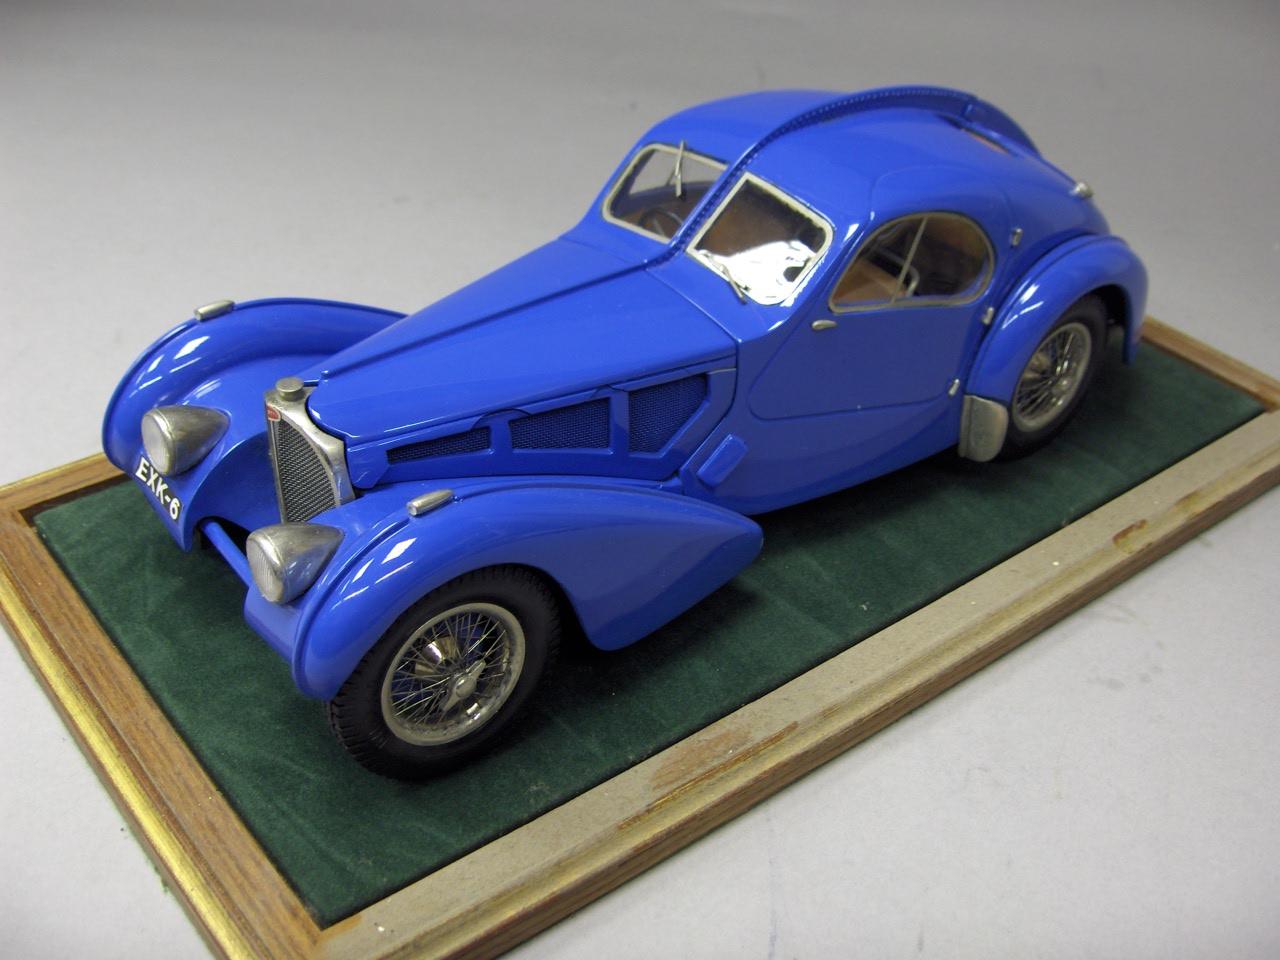 Bonhams Cars : A professionally hand-built Bugatti Atlantic model by RIO,